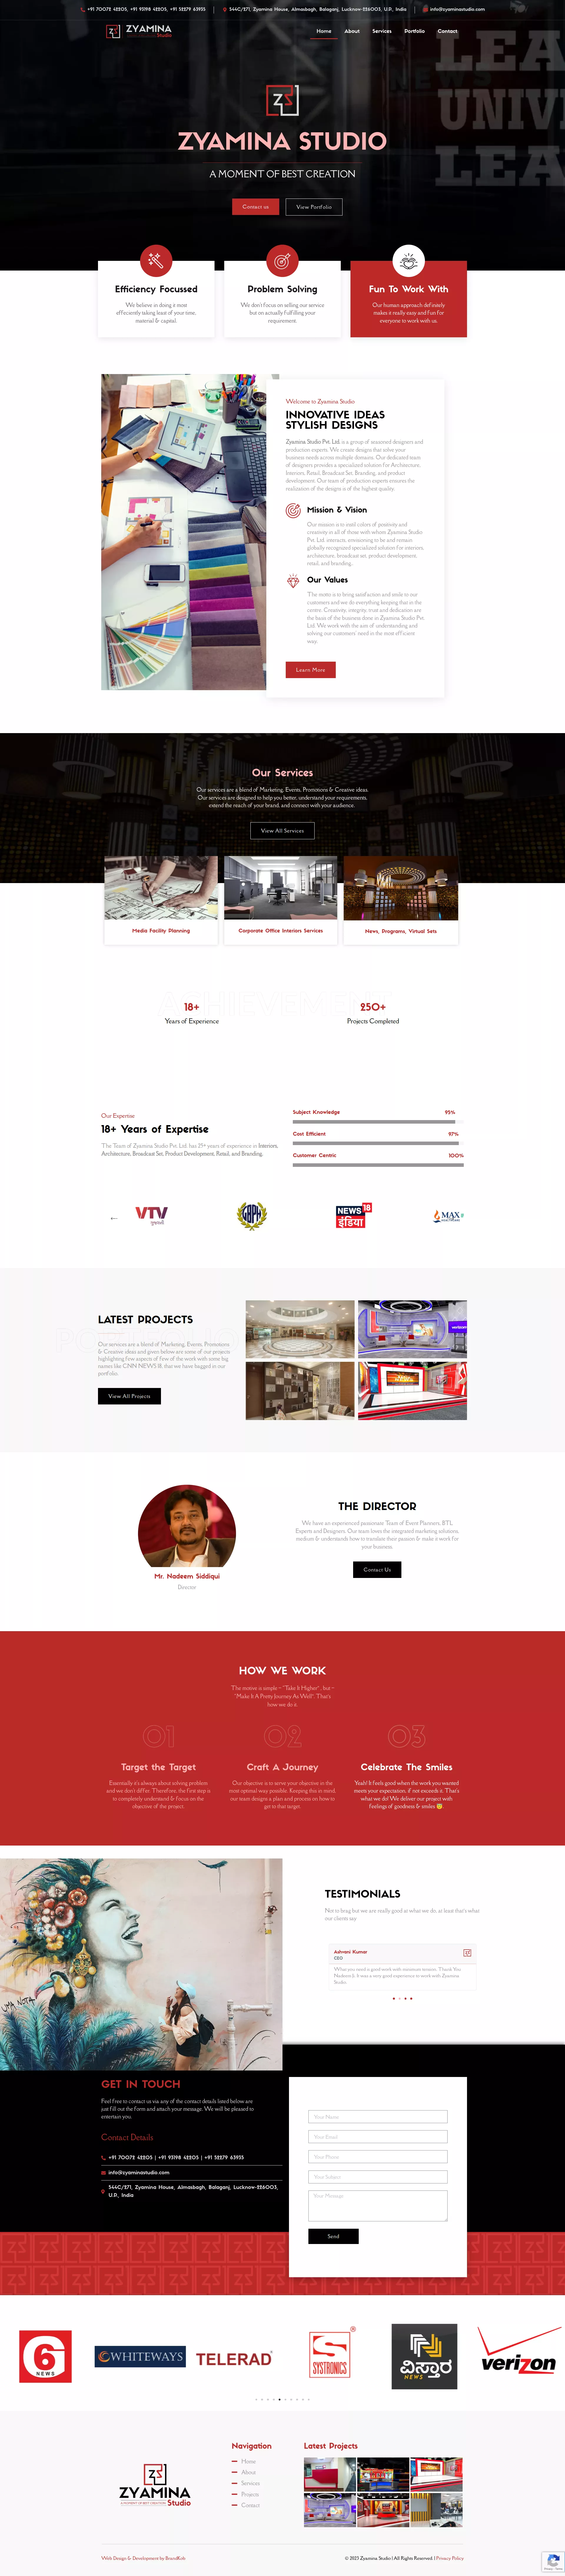 Homepage Zyamina Studio - BrandKob Projects